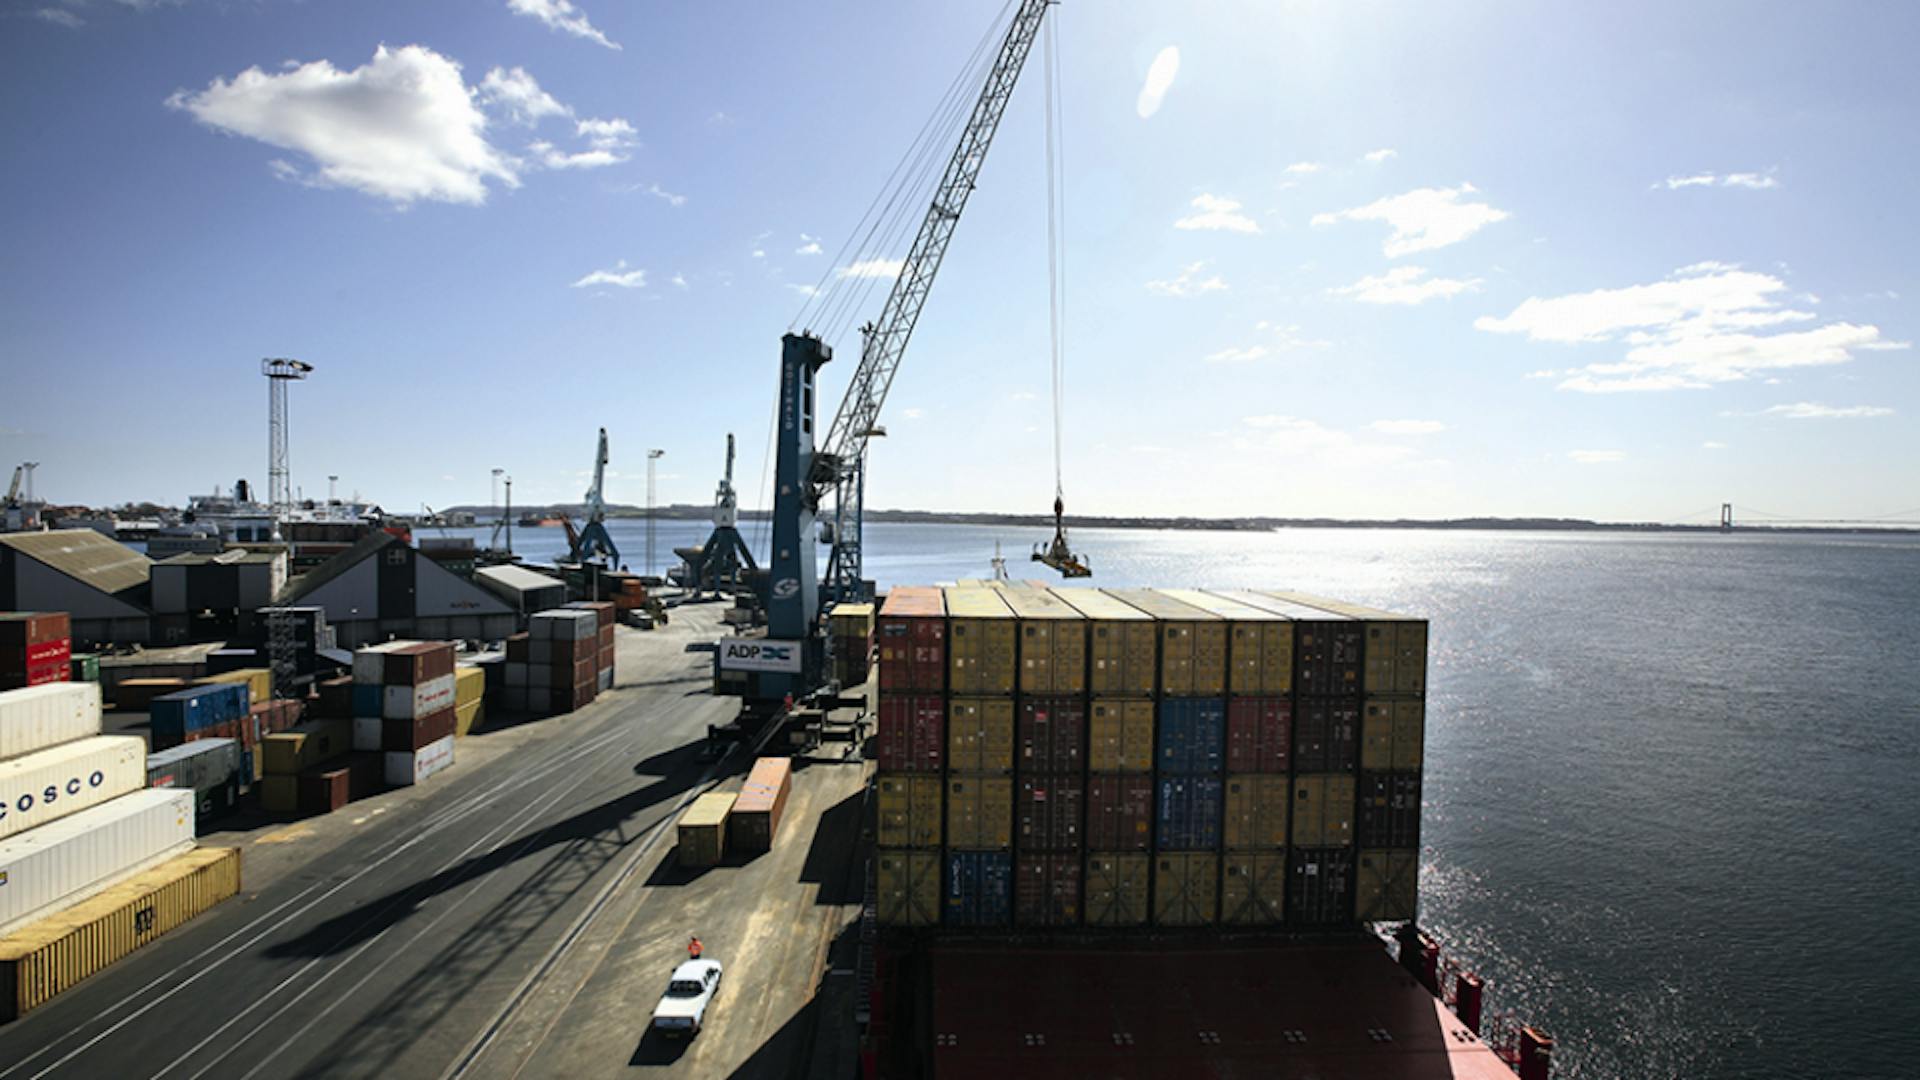 Photo of the ADP - Associated Danish Ports